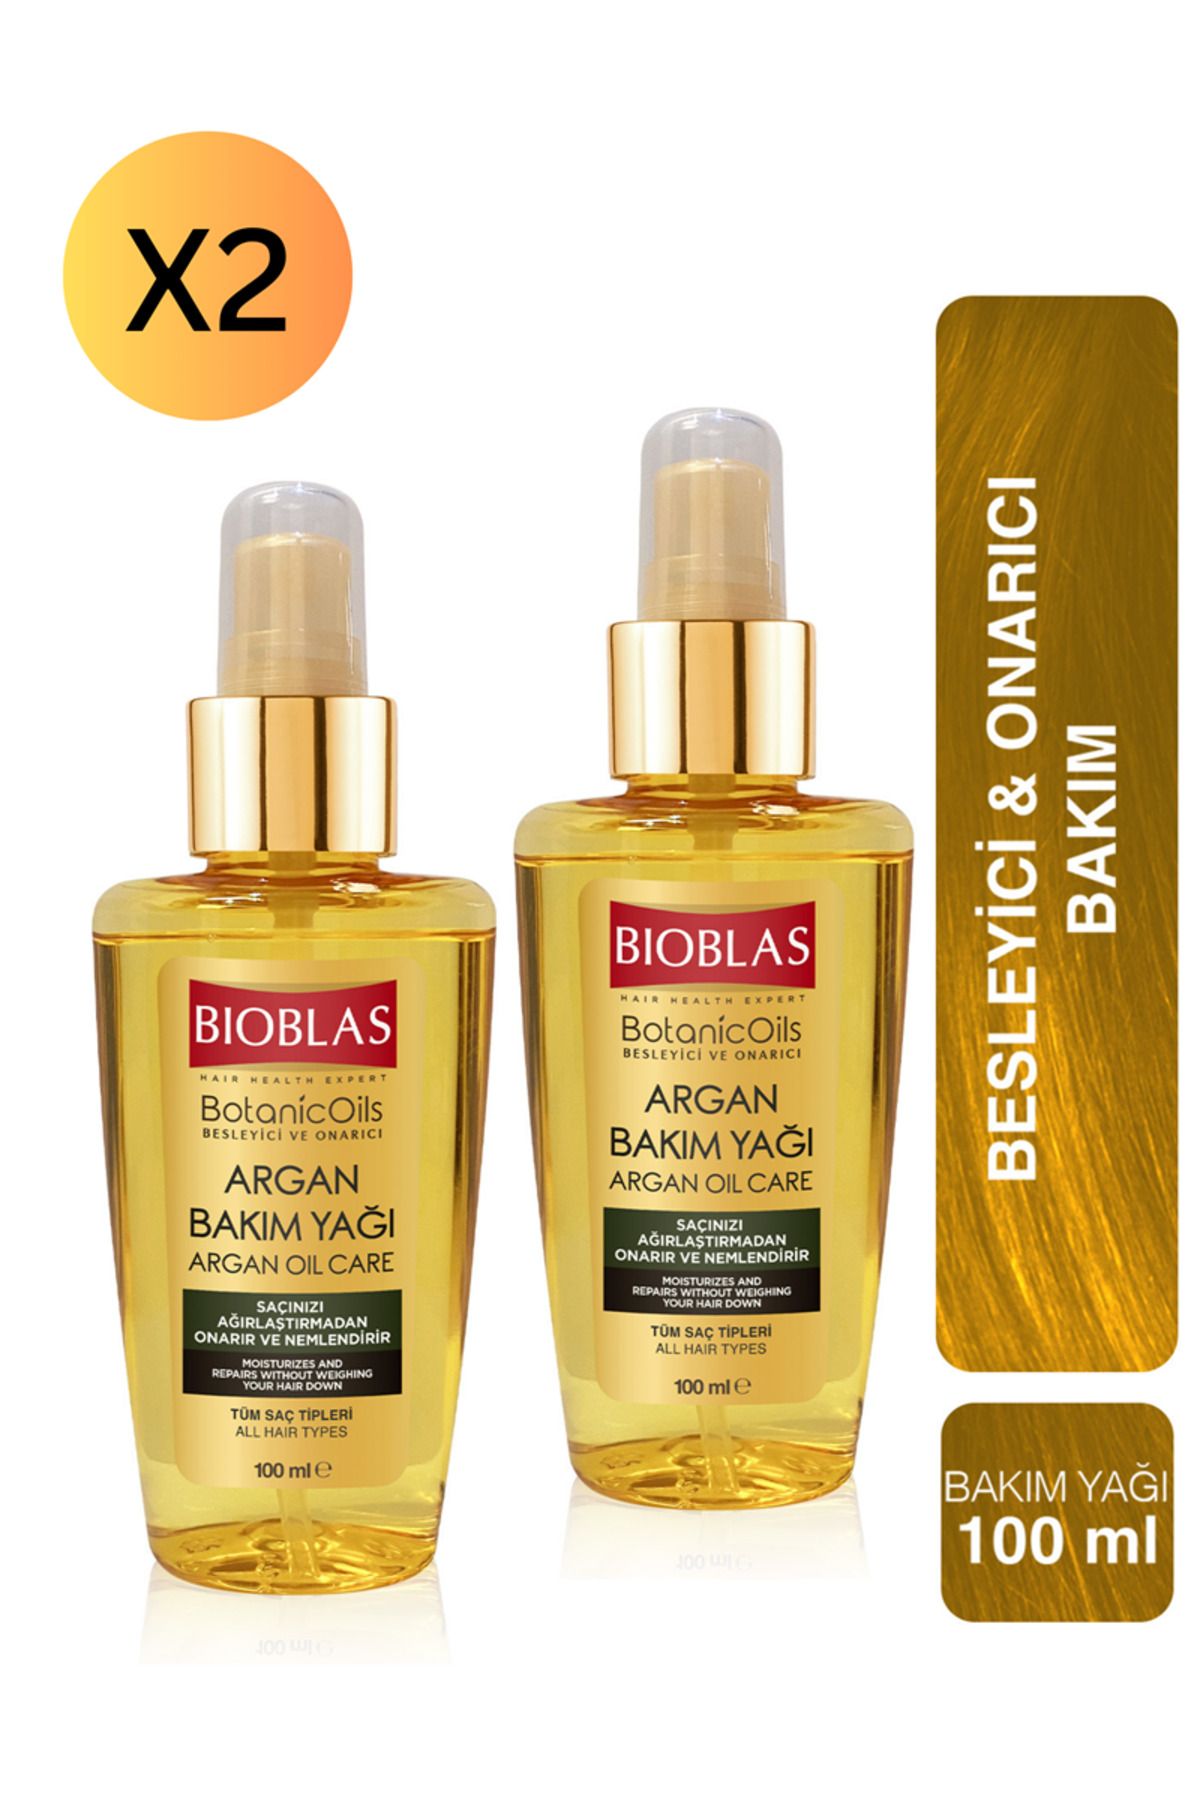 Bioblas Botanic Oils Argan Bakım Yağı 100 ml X 2 adet 1122332699